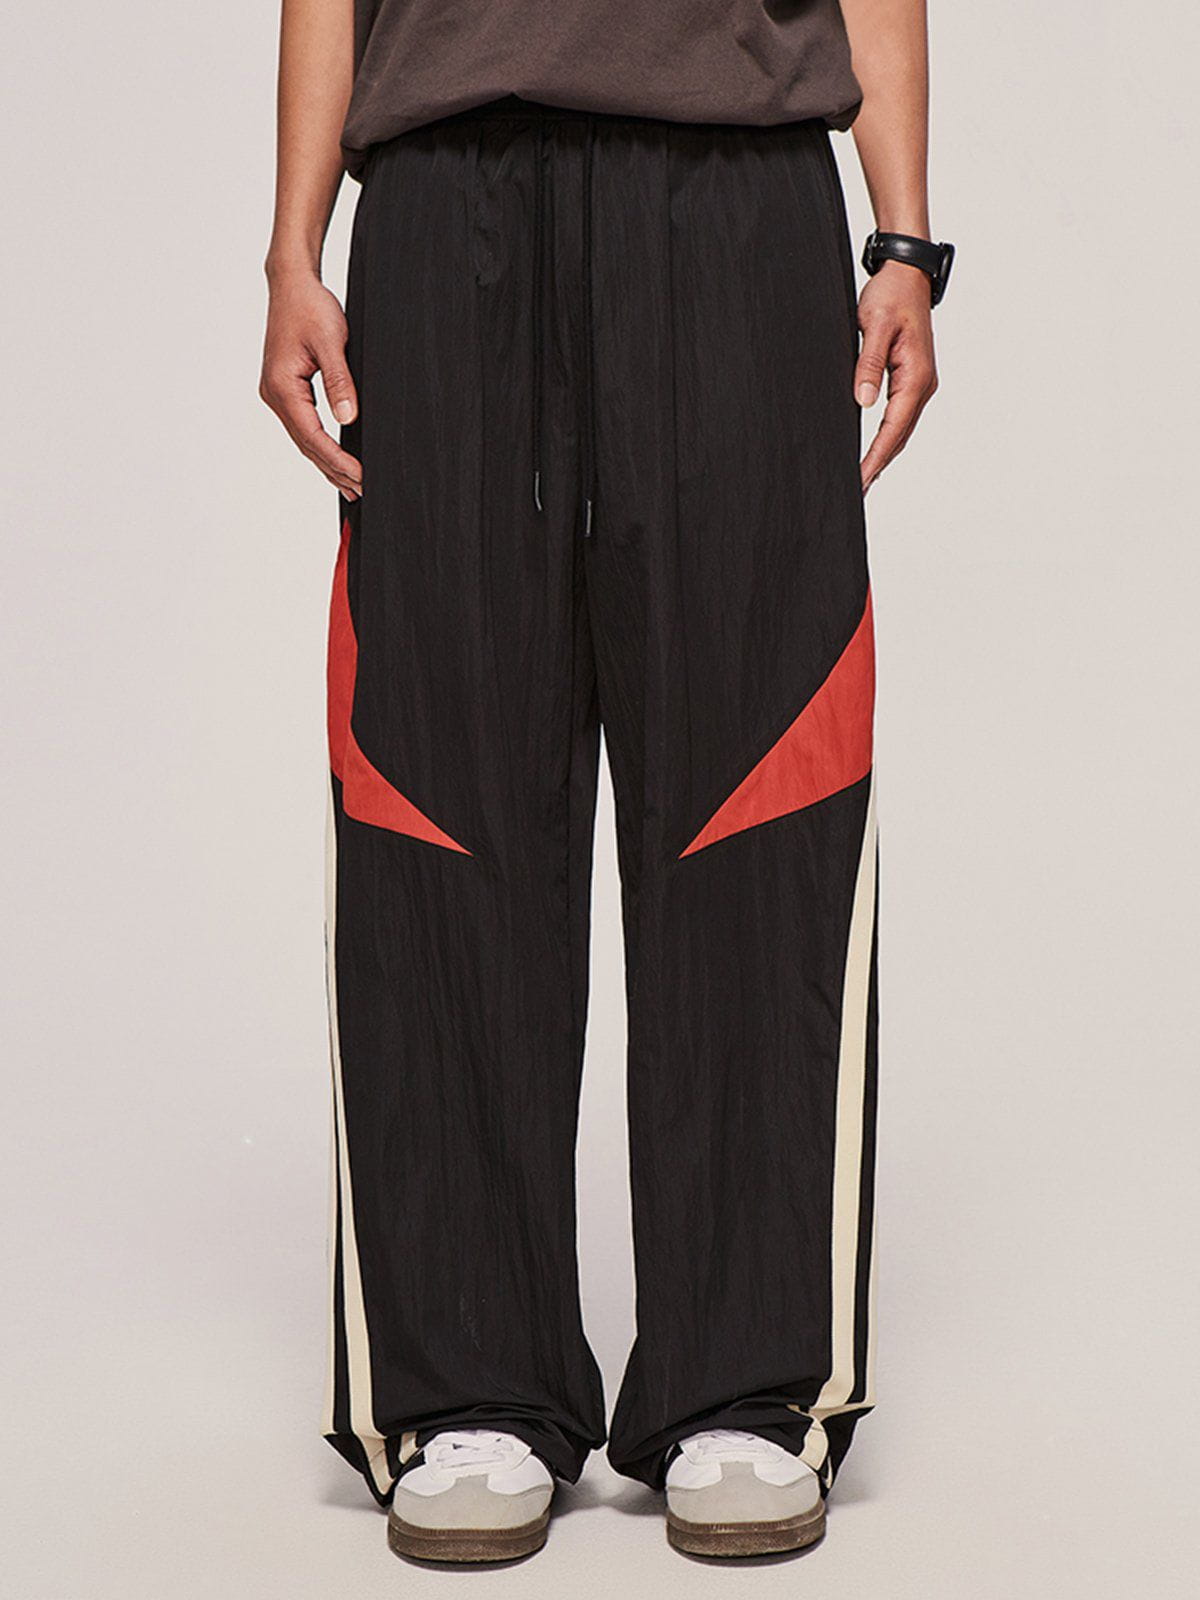 Majesda® - Vintage Oblique Stripe Sweatpants outfit ideas streetwear fashion